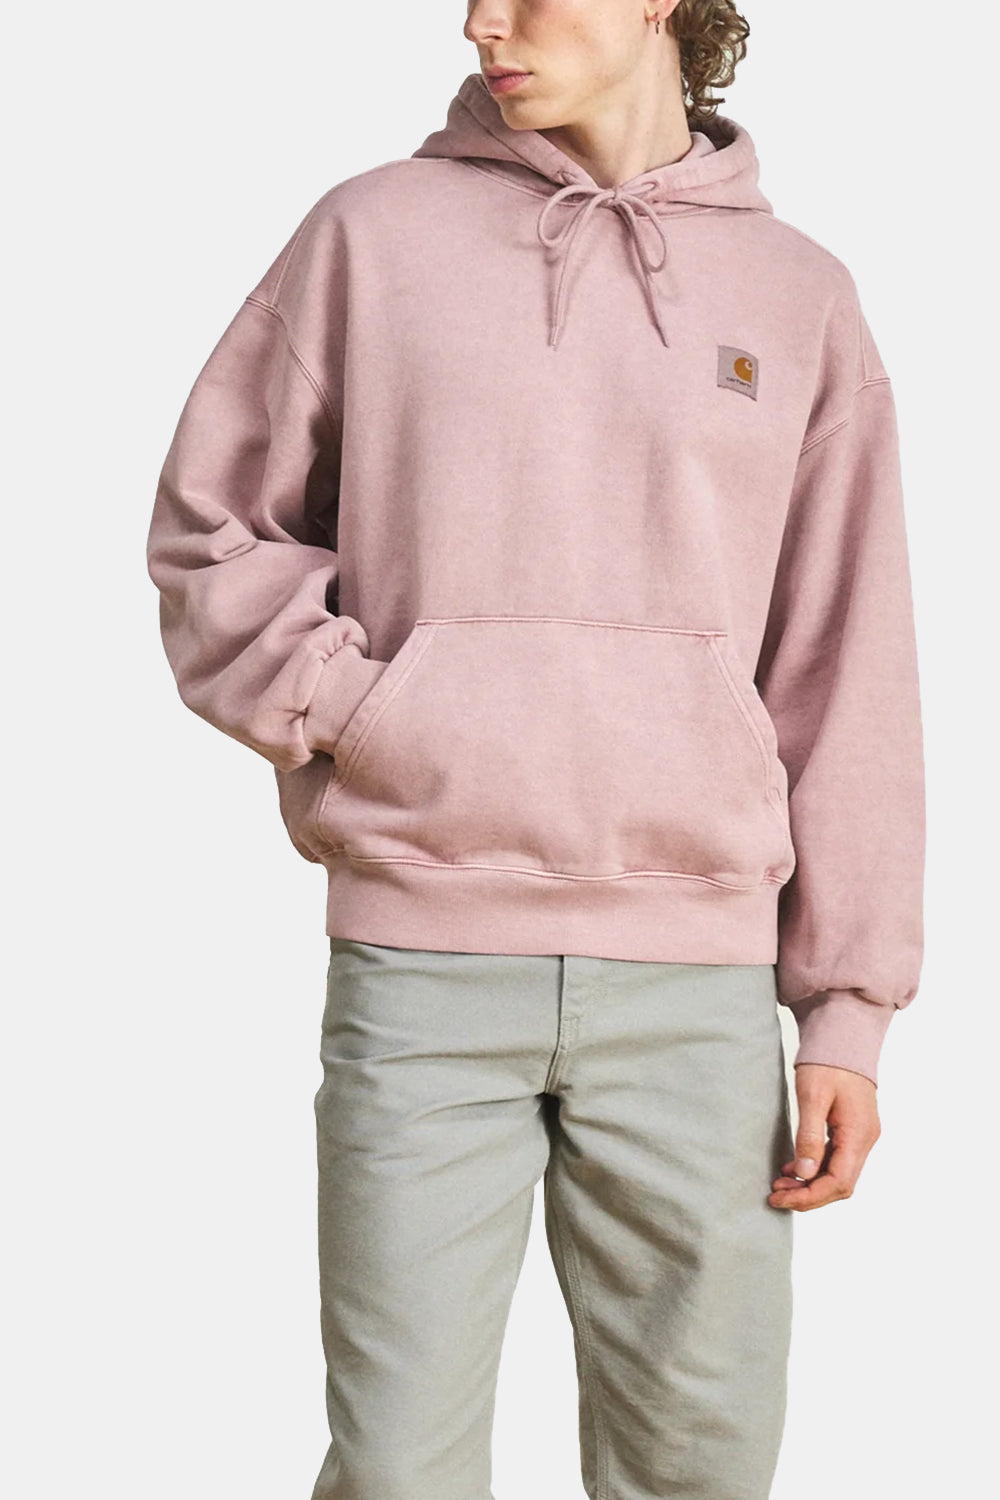 Carhartt Vista-sweatshirt med hætte (Glassy Pink)